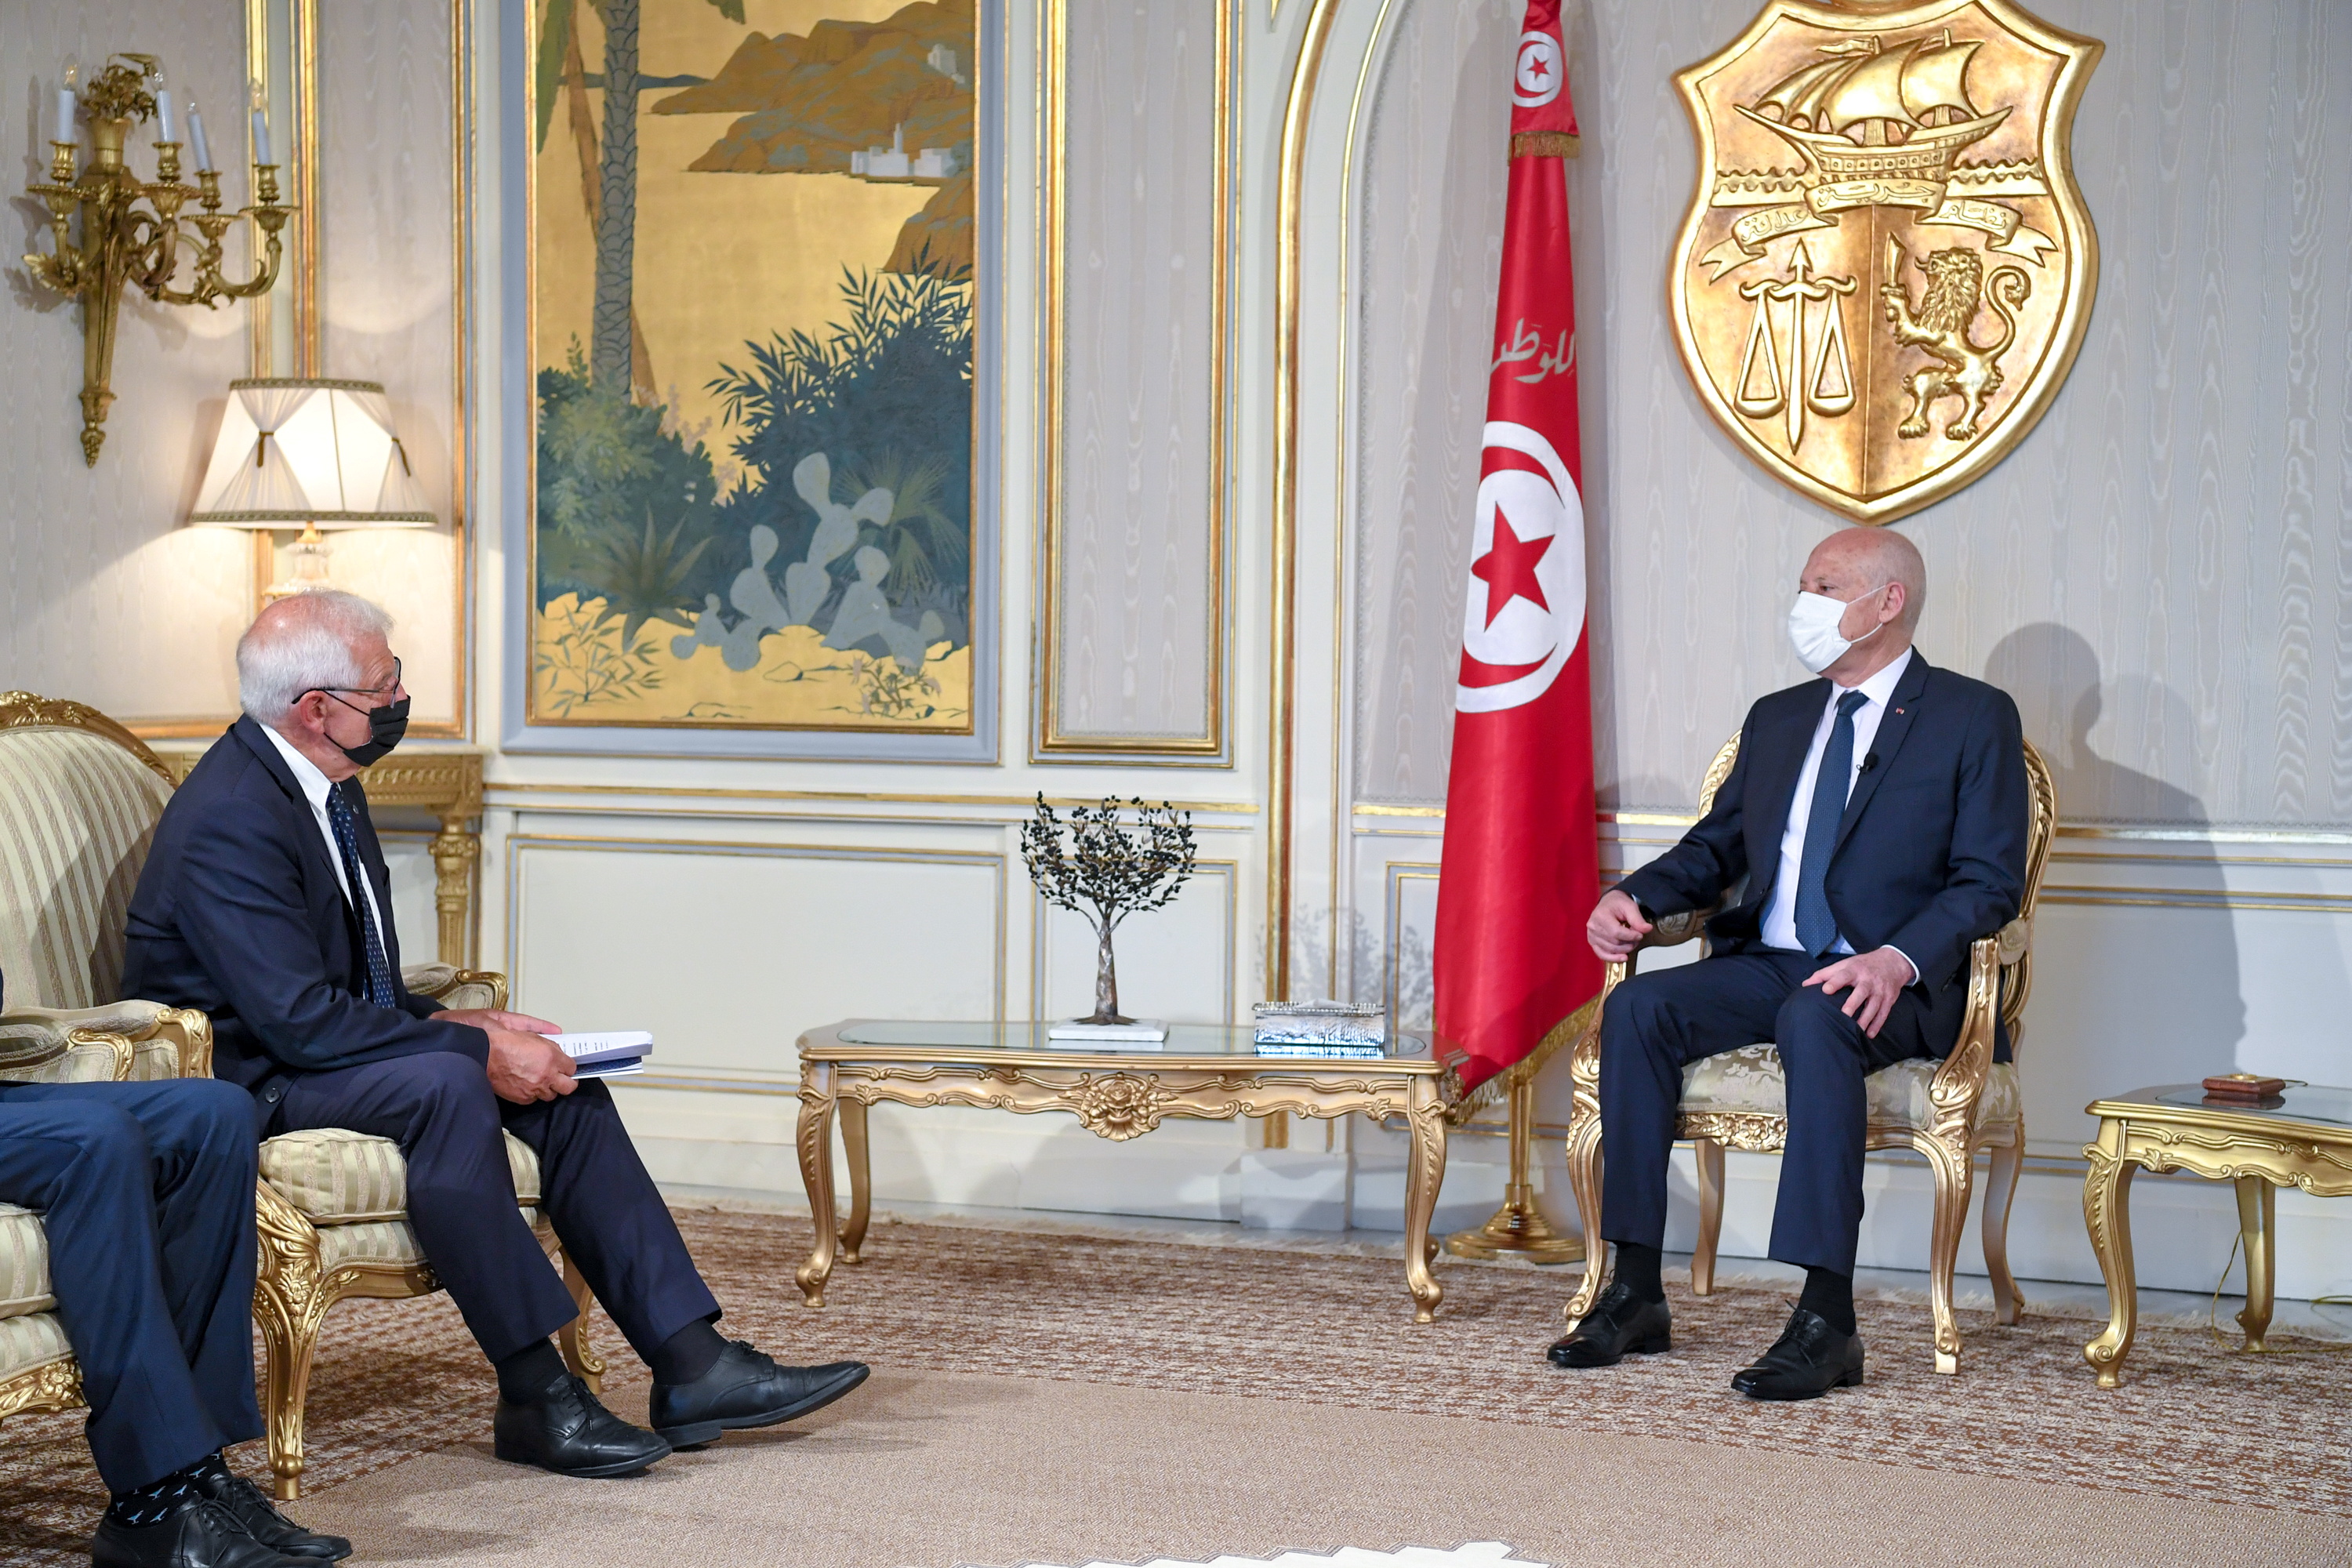 European Union Foreign Policy Chief Josep Borrell meets with Tunisia's President Kais Saied in Tunis